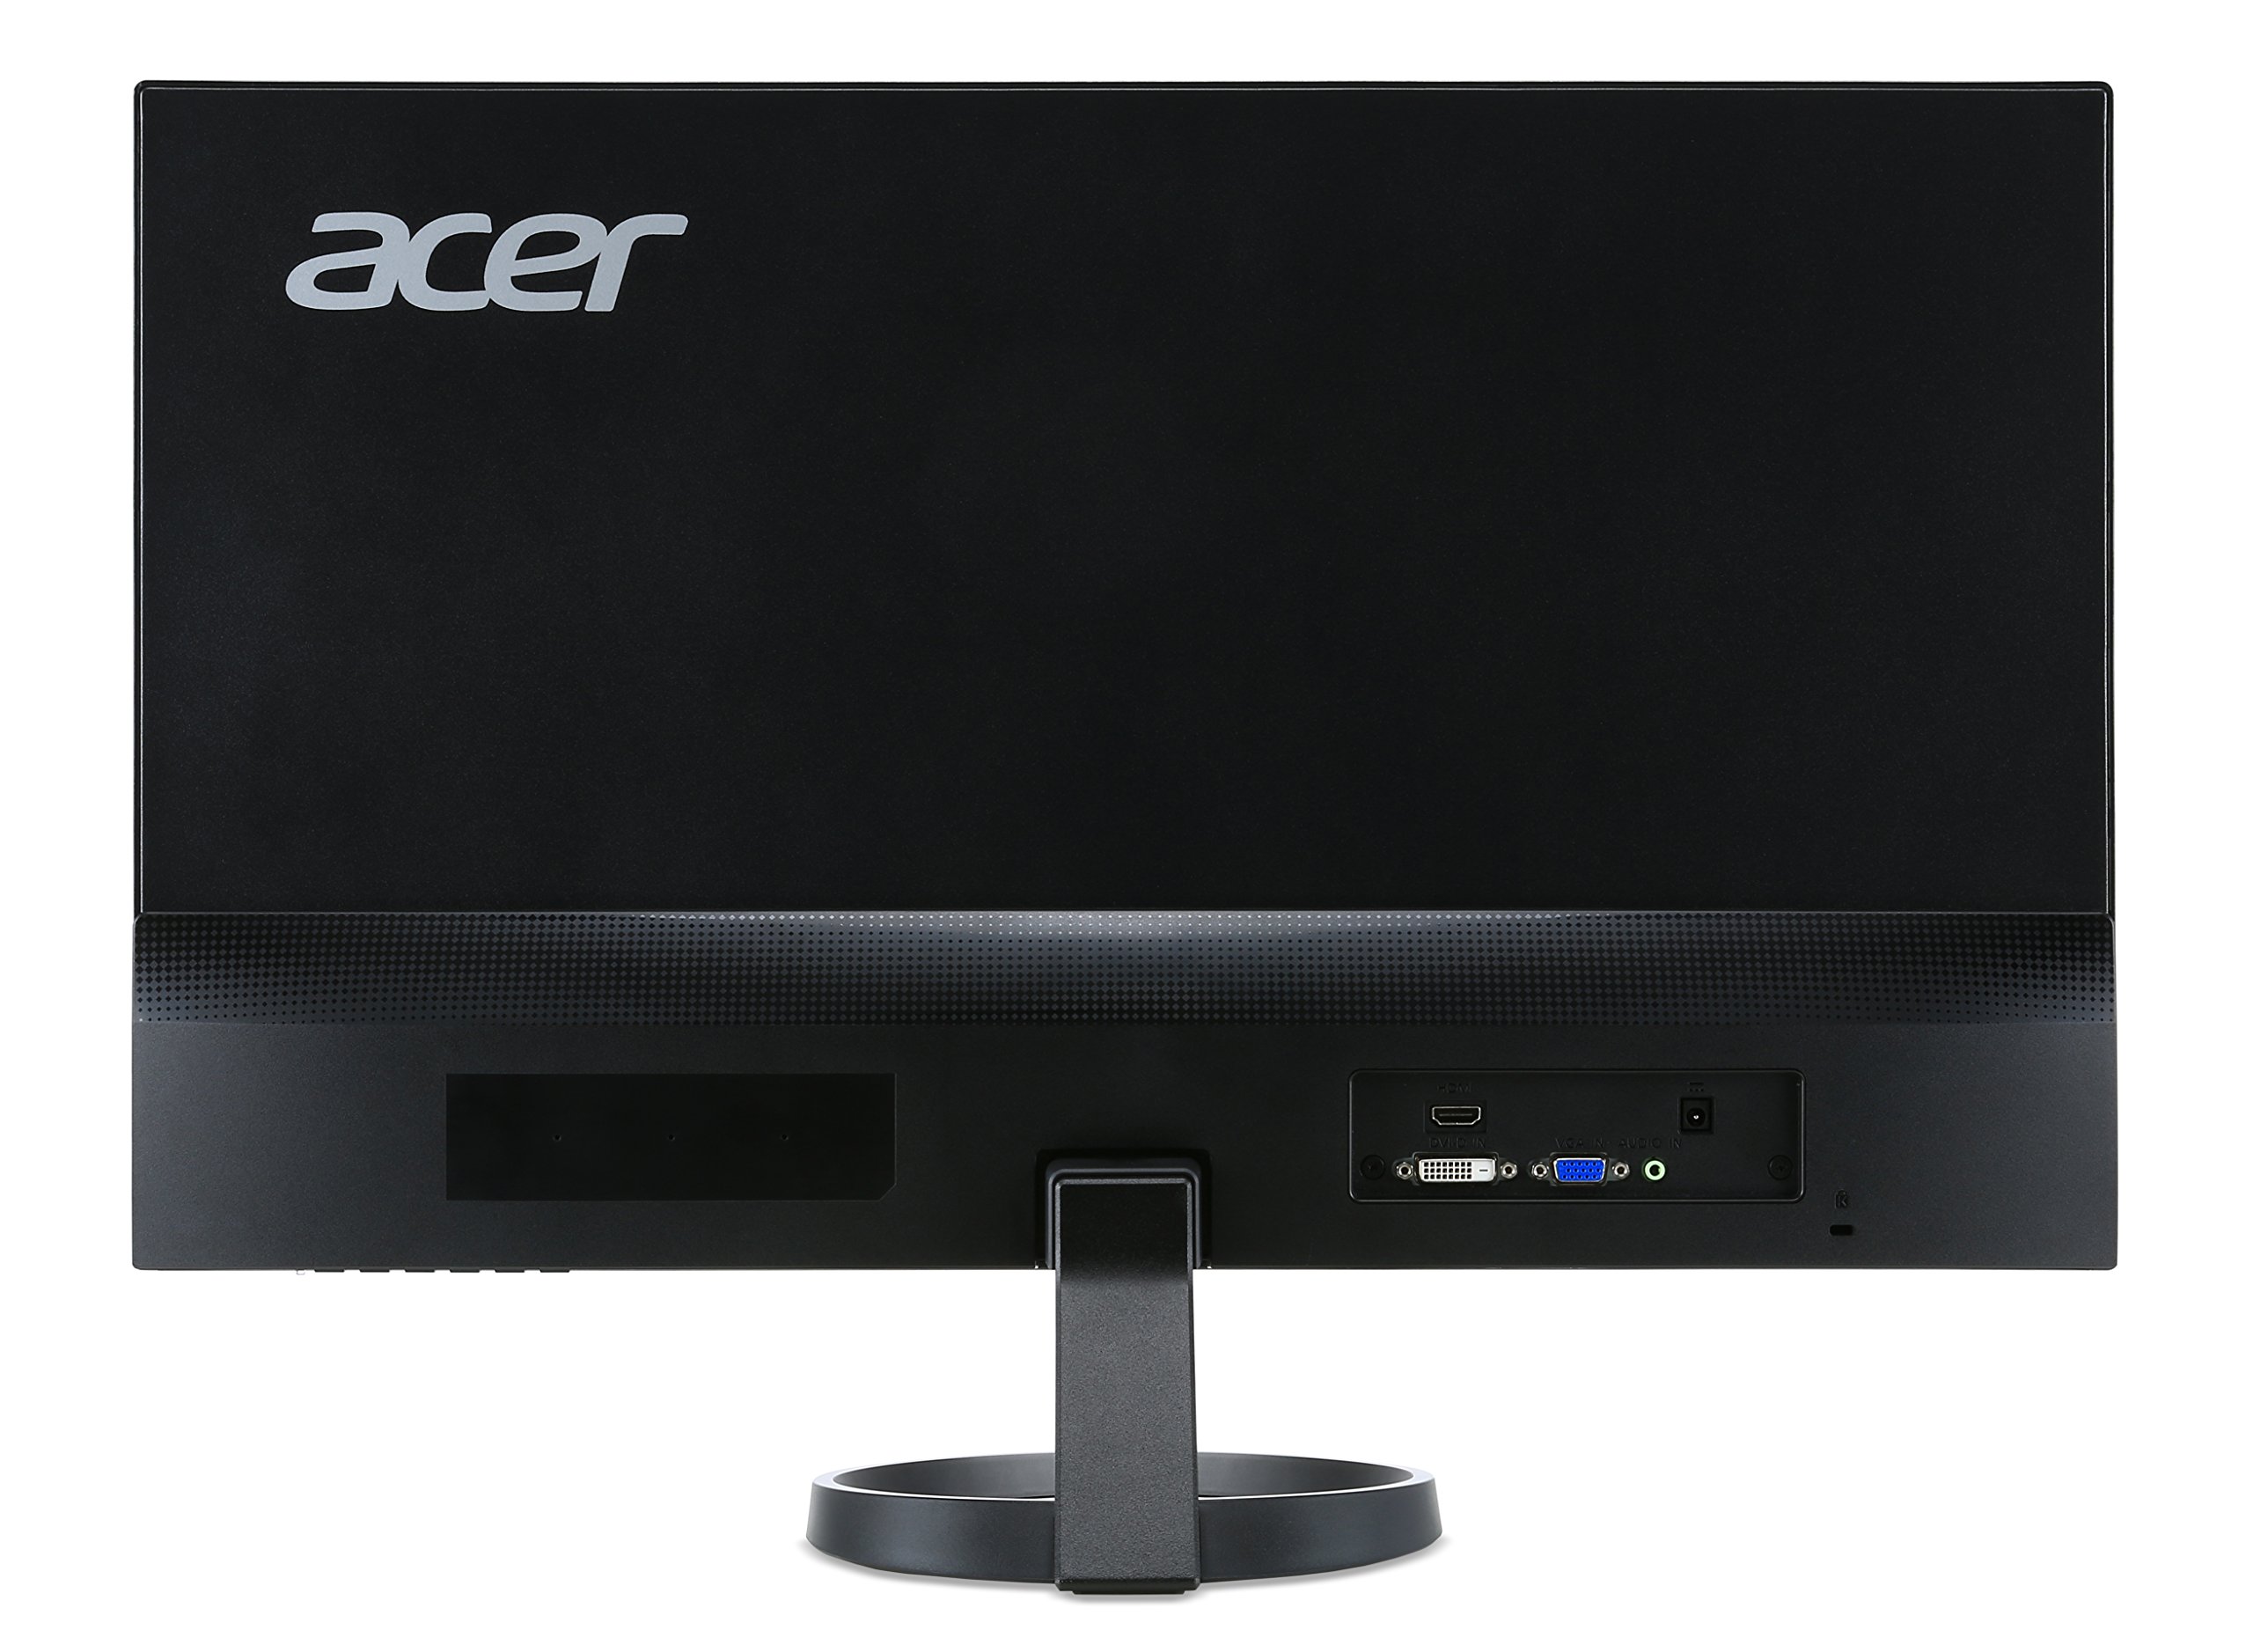 Acer R271 bid 27-inch IPS Full HD (1920 x 1080) Display (VGA, DVI & HDMI Ports),Black